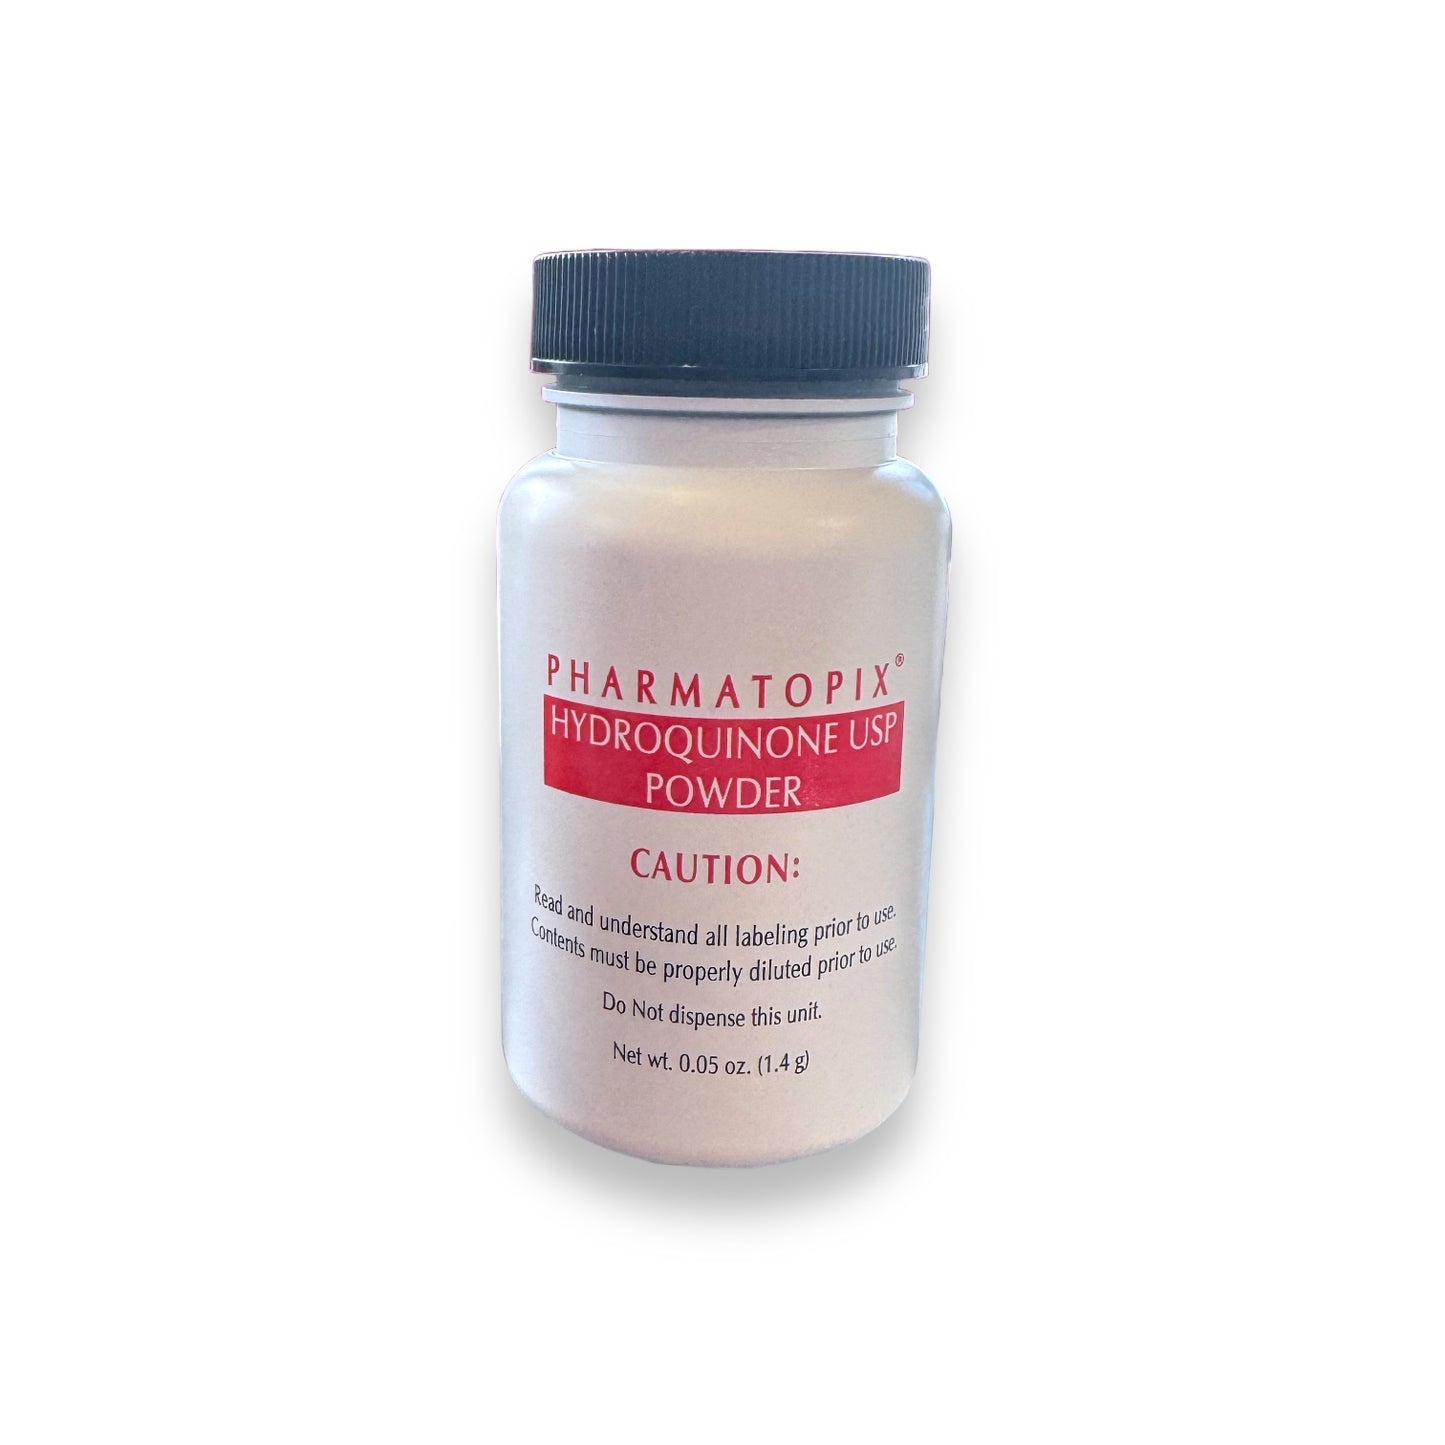 Pharmatopix Hydroquinone USP Powder